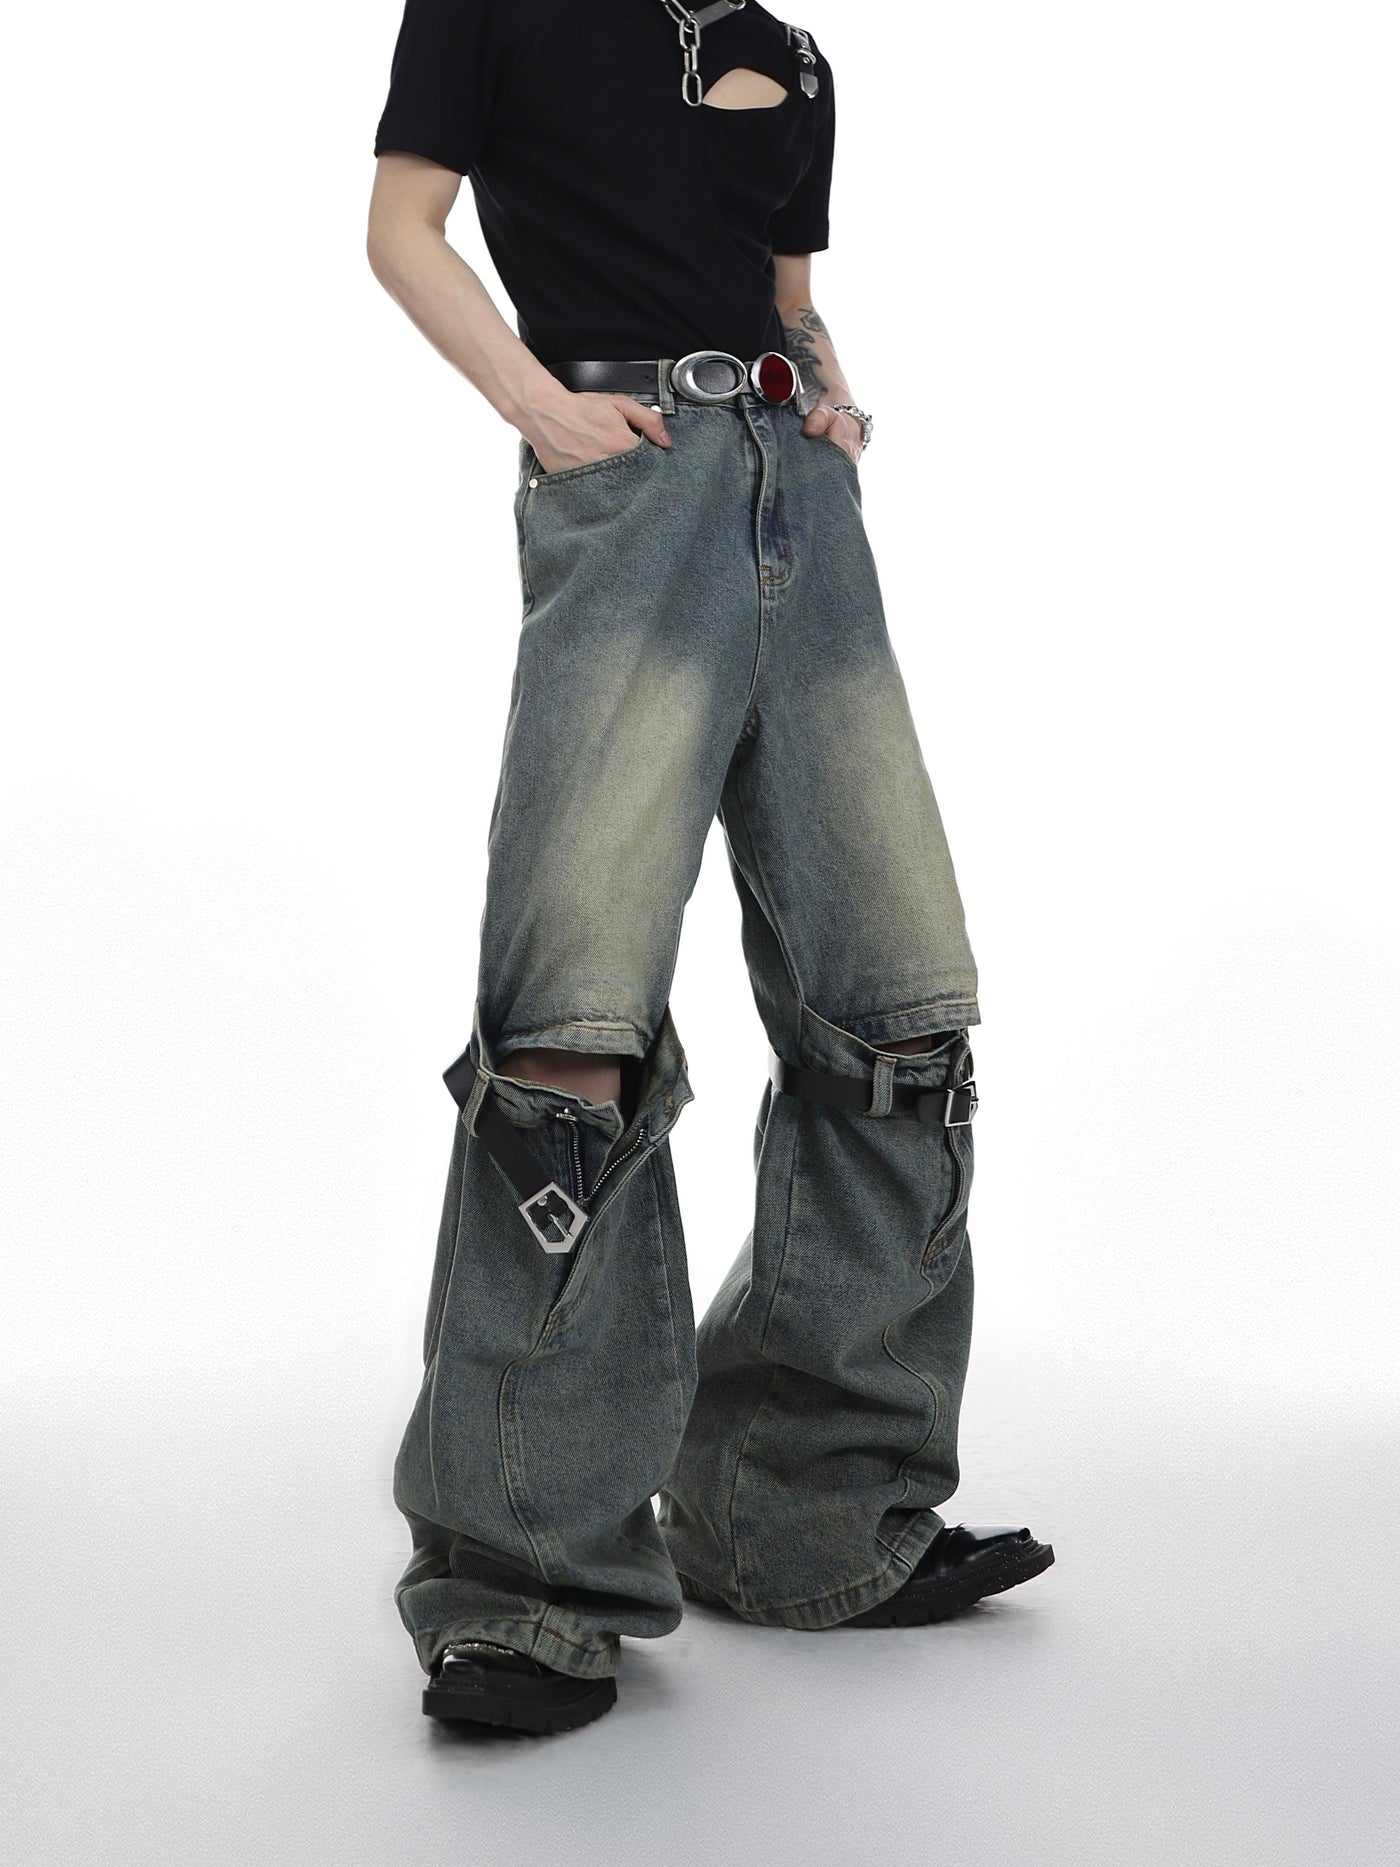 Washed Knee Buckle Belt Jeans Korean Street Fashion Jeans By Argue Culture Shop Online at OH Vault